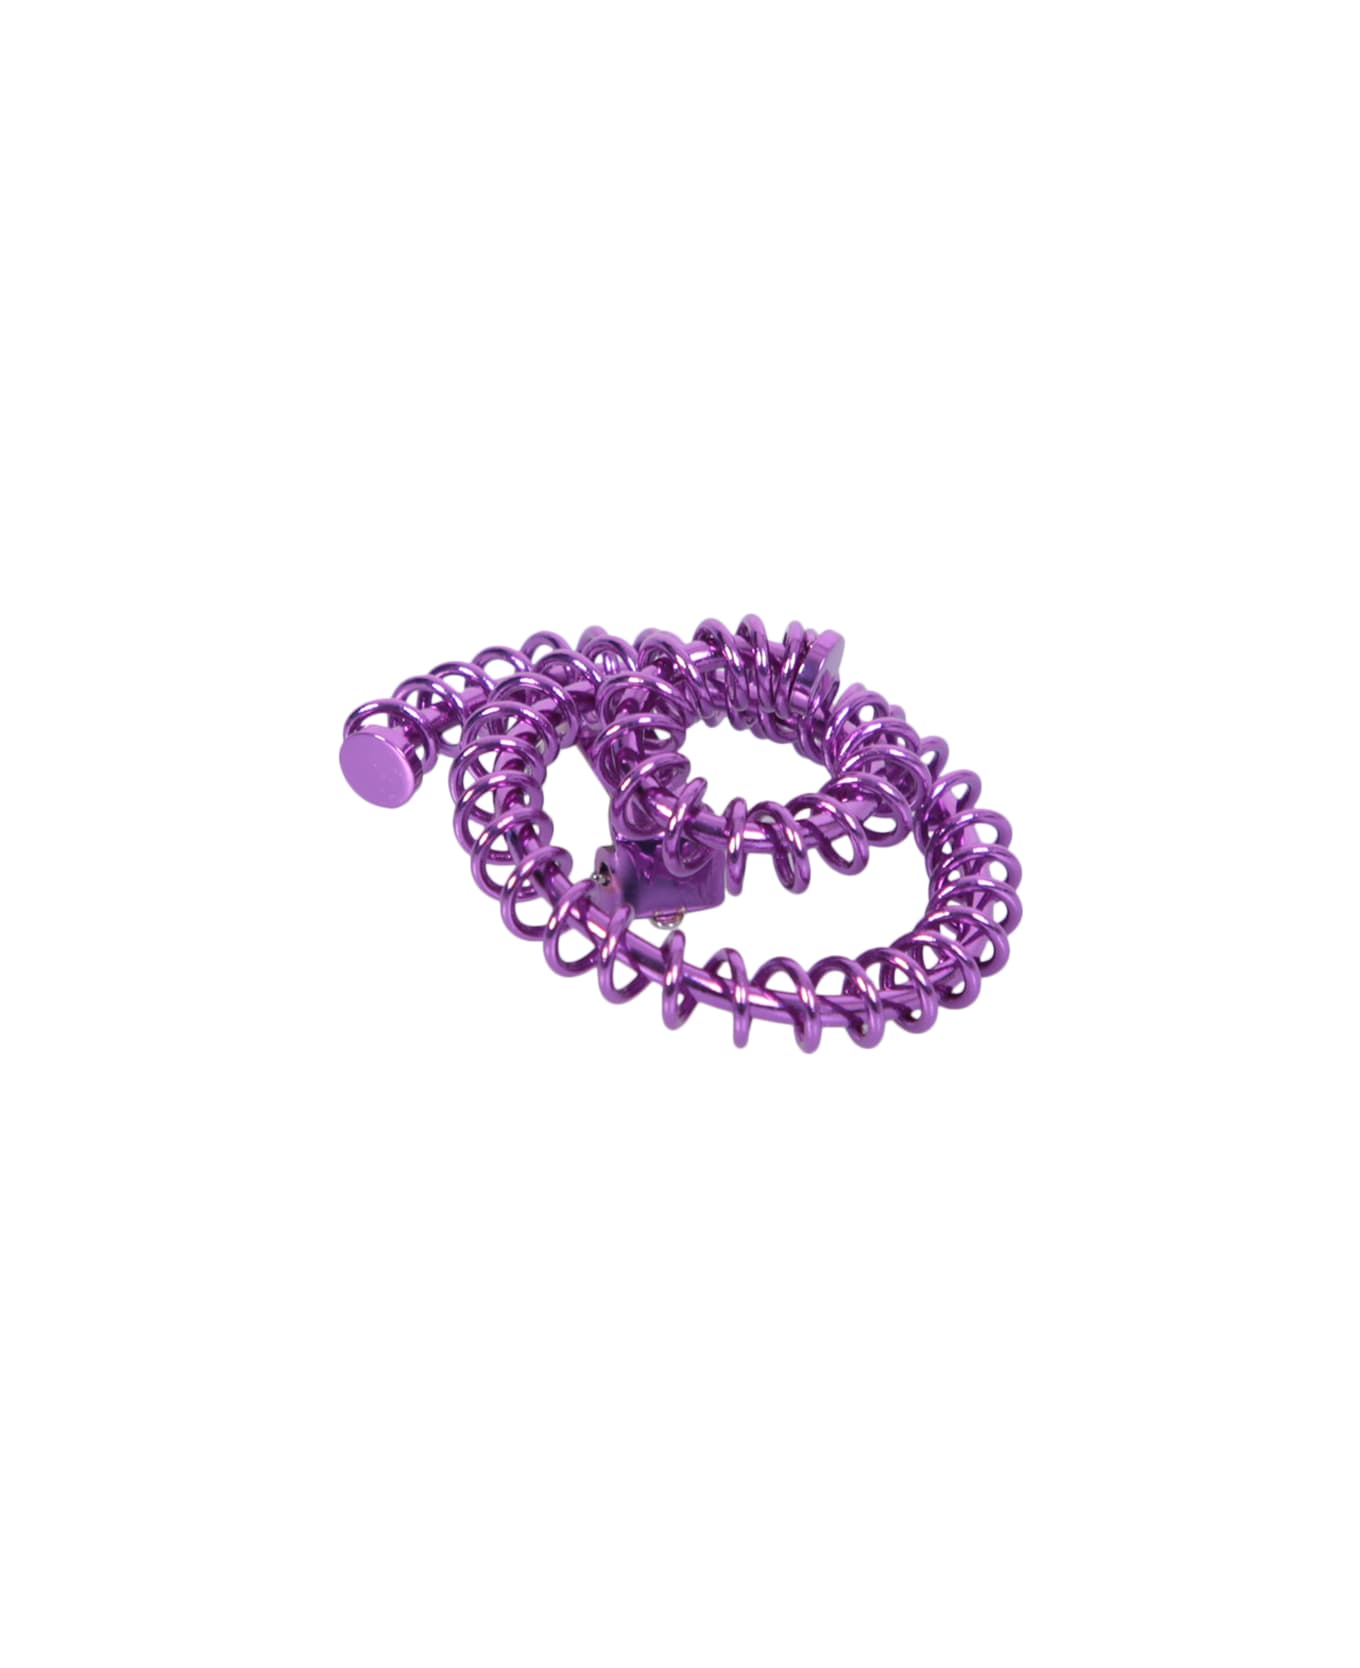 Sunnei Garland Spiral Violet Earrings - Purple